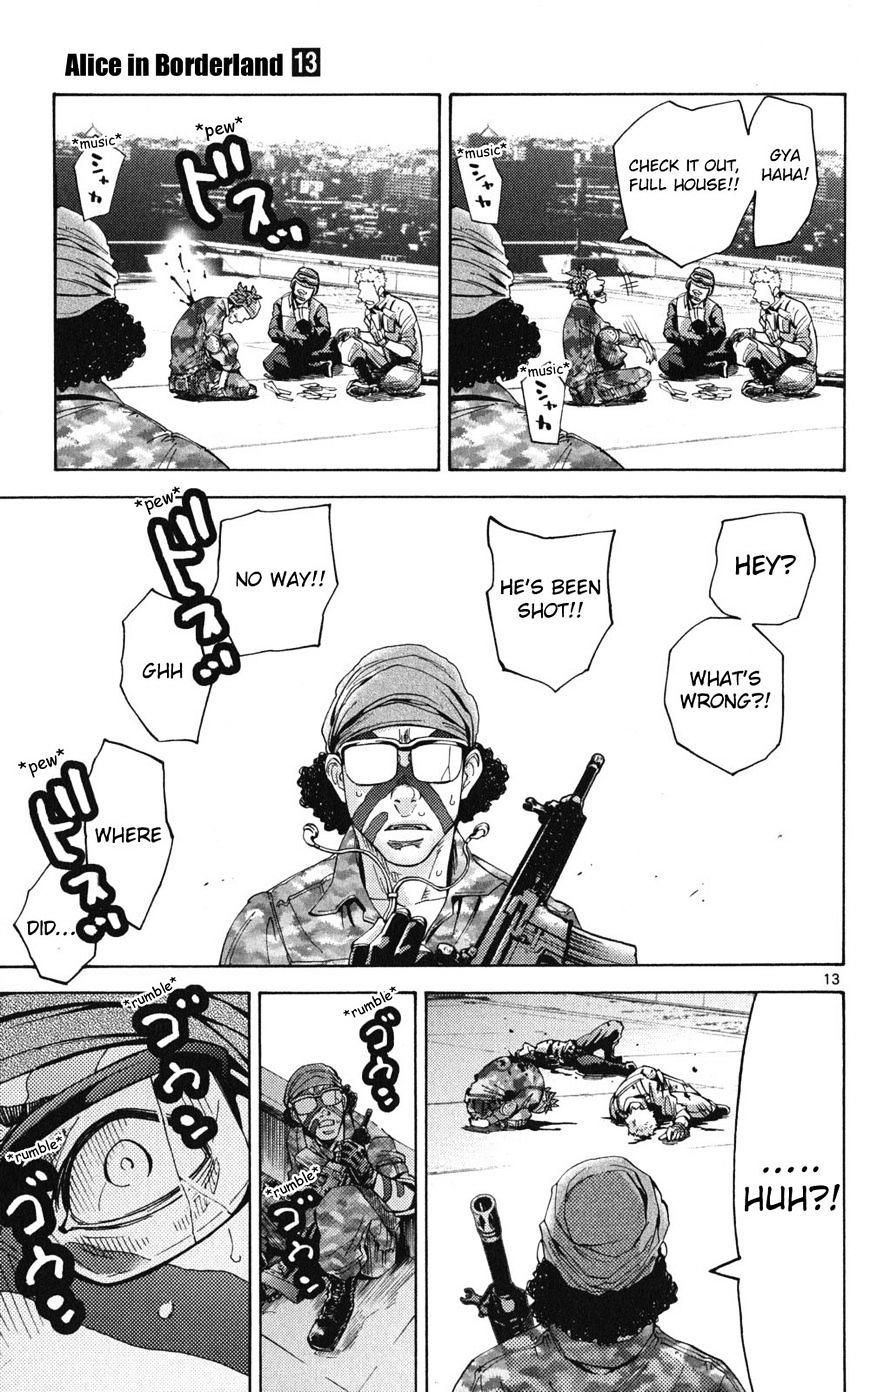 Imawa No Kuni No Alice Chapter 49.1 : Side Story 5 - King Of Spades (1) page 12 - Mangakakalot